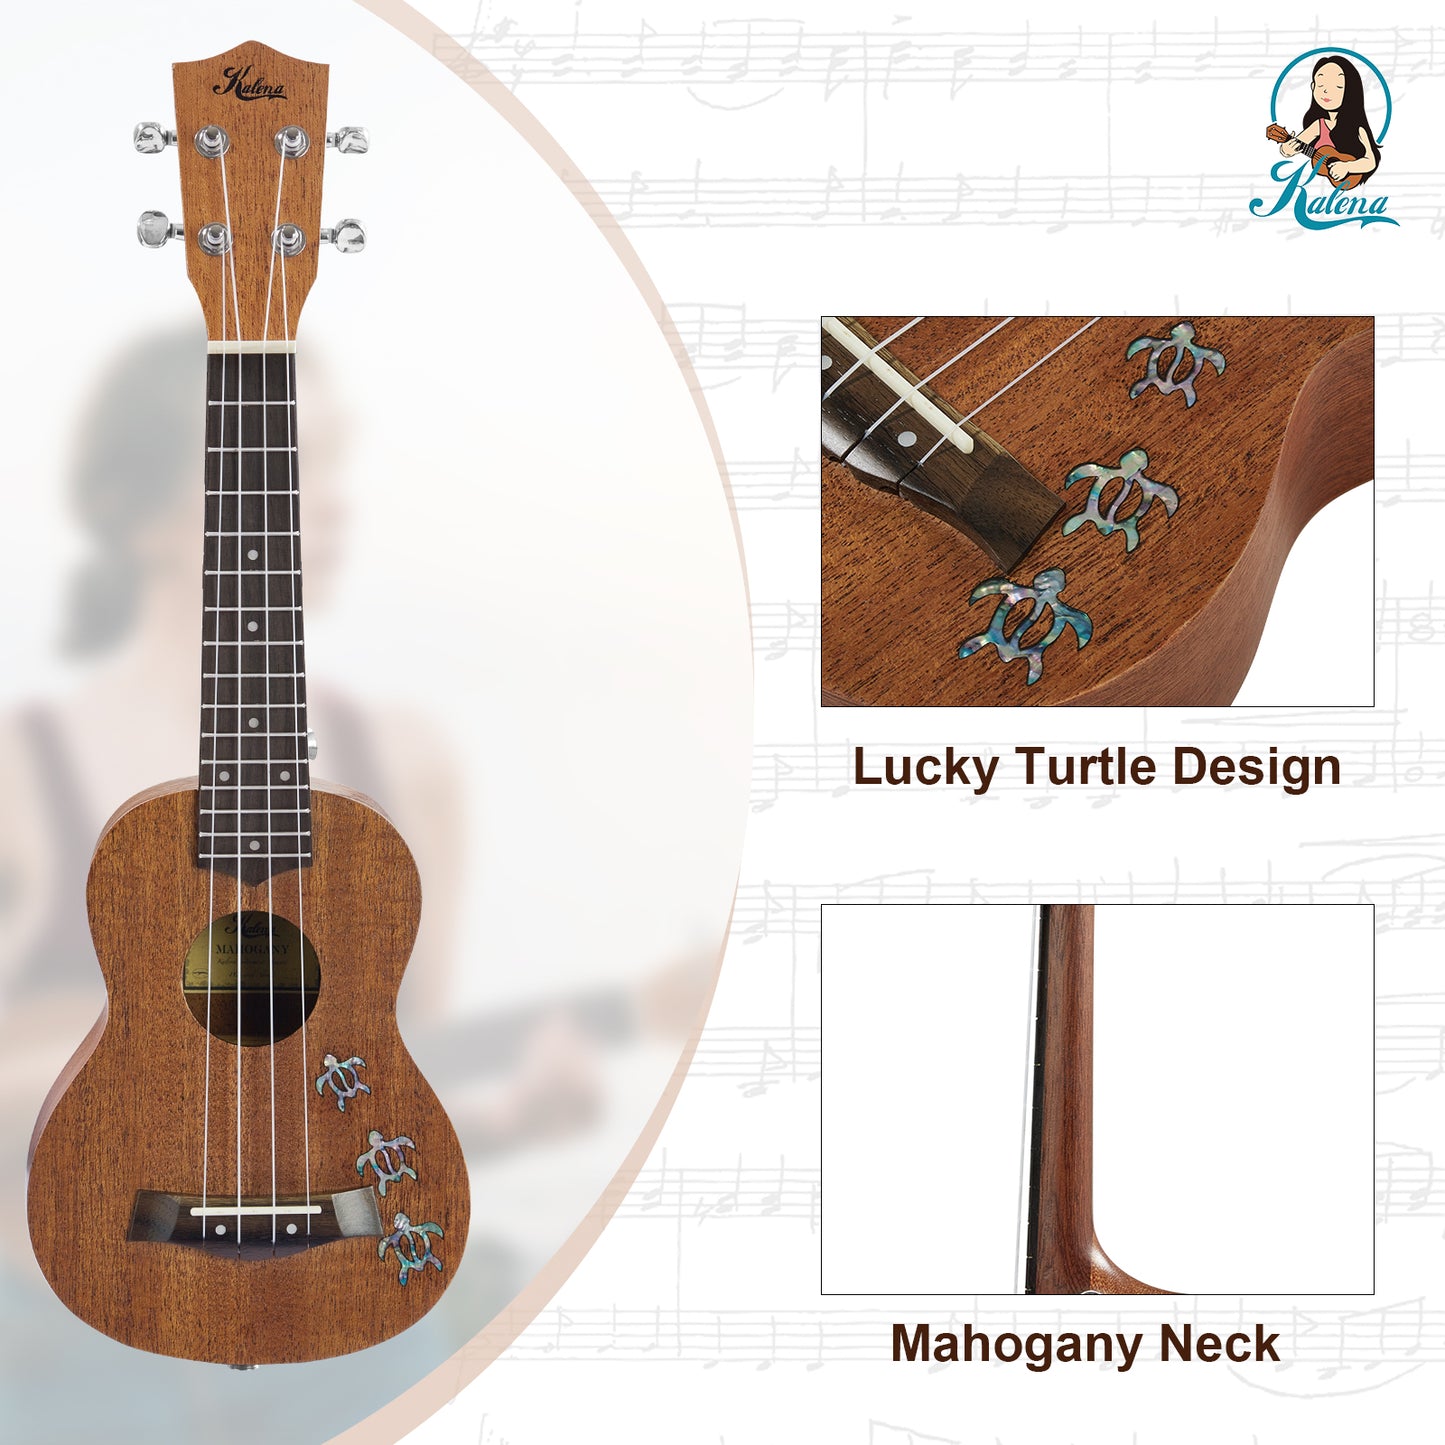 Kalena LM series Soprano Mahogany Ukulele Turtle inlay Traditional Complete Set: Strings, Picks, Strap, Digital Tuner, Padded Case, Starter Guide